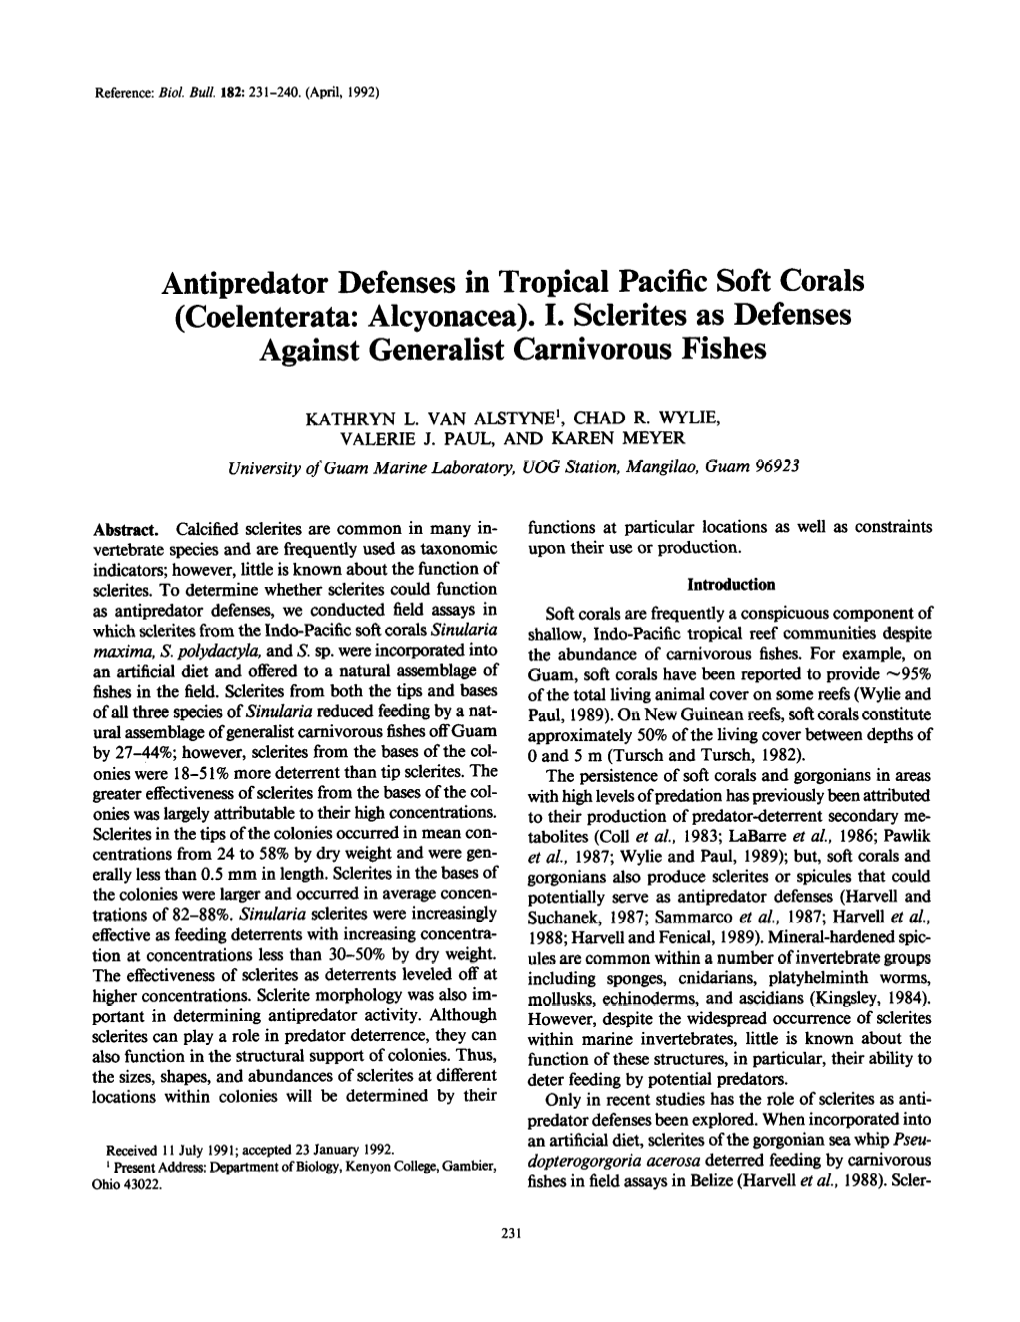 Antipredator Defenses in Tropical Pacific Soft Corals (Coelenterata: Alcyonacea)